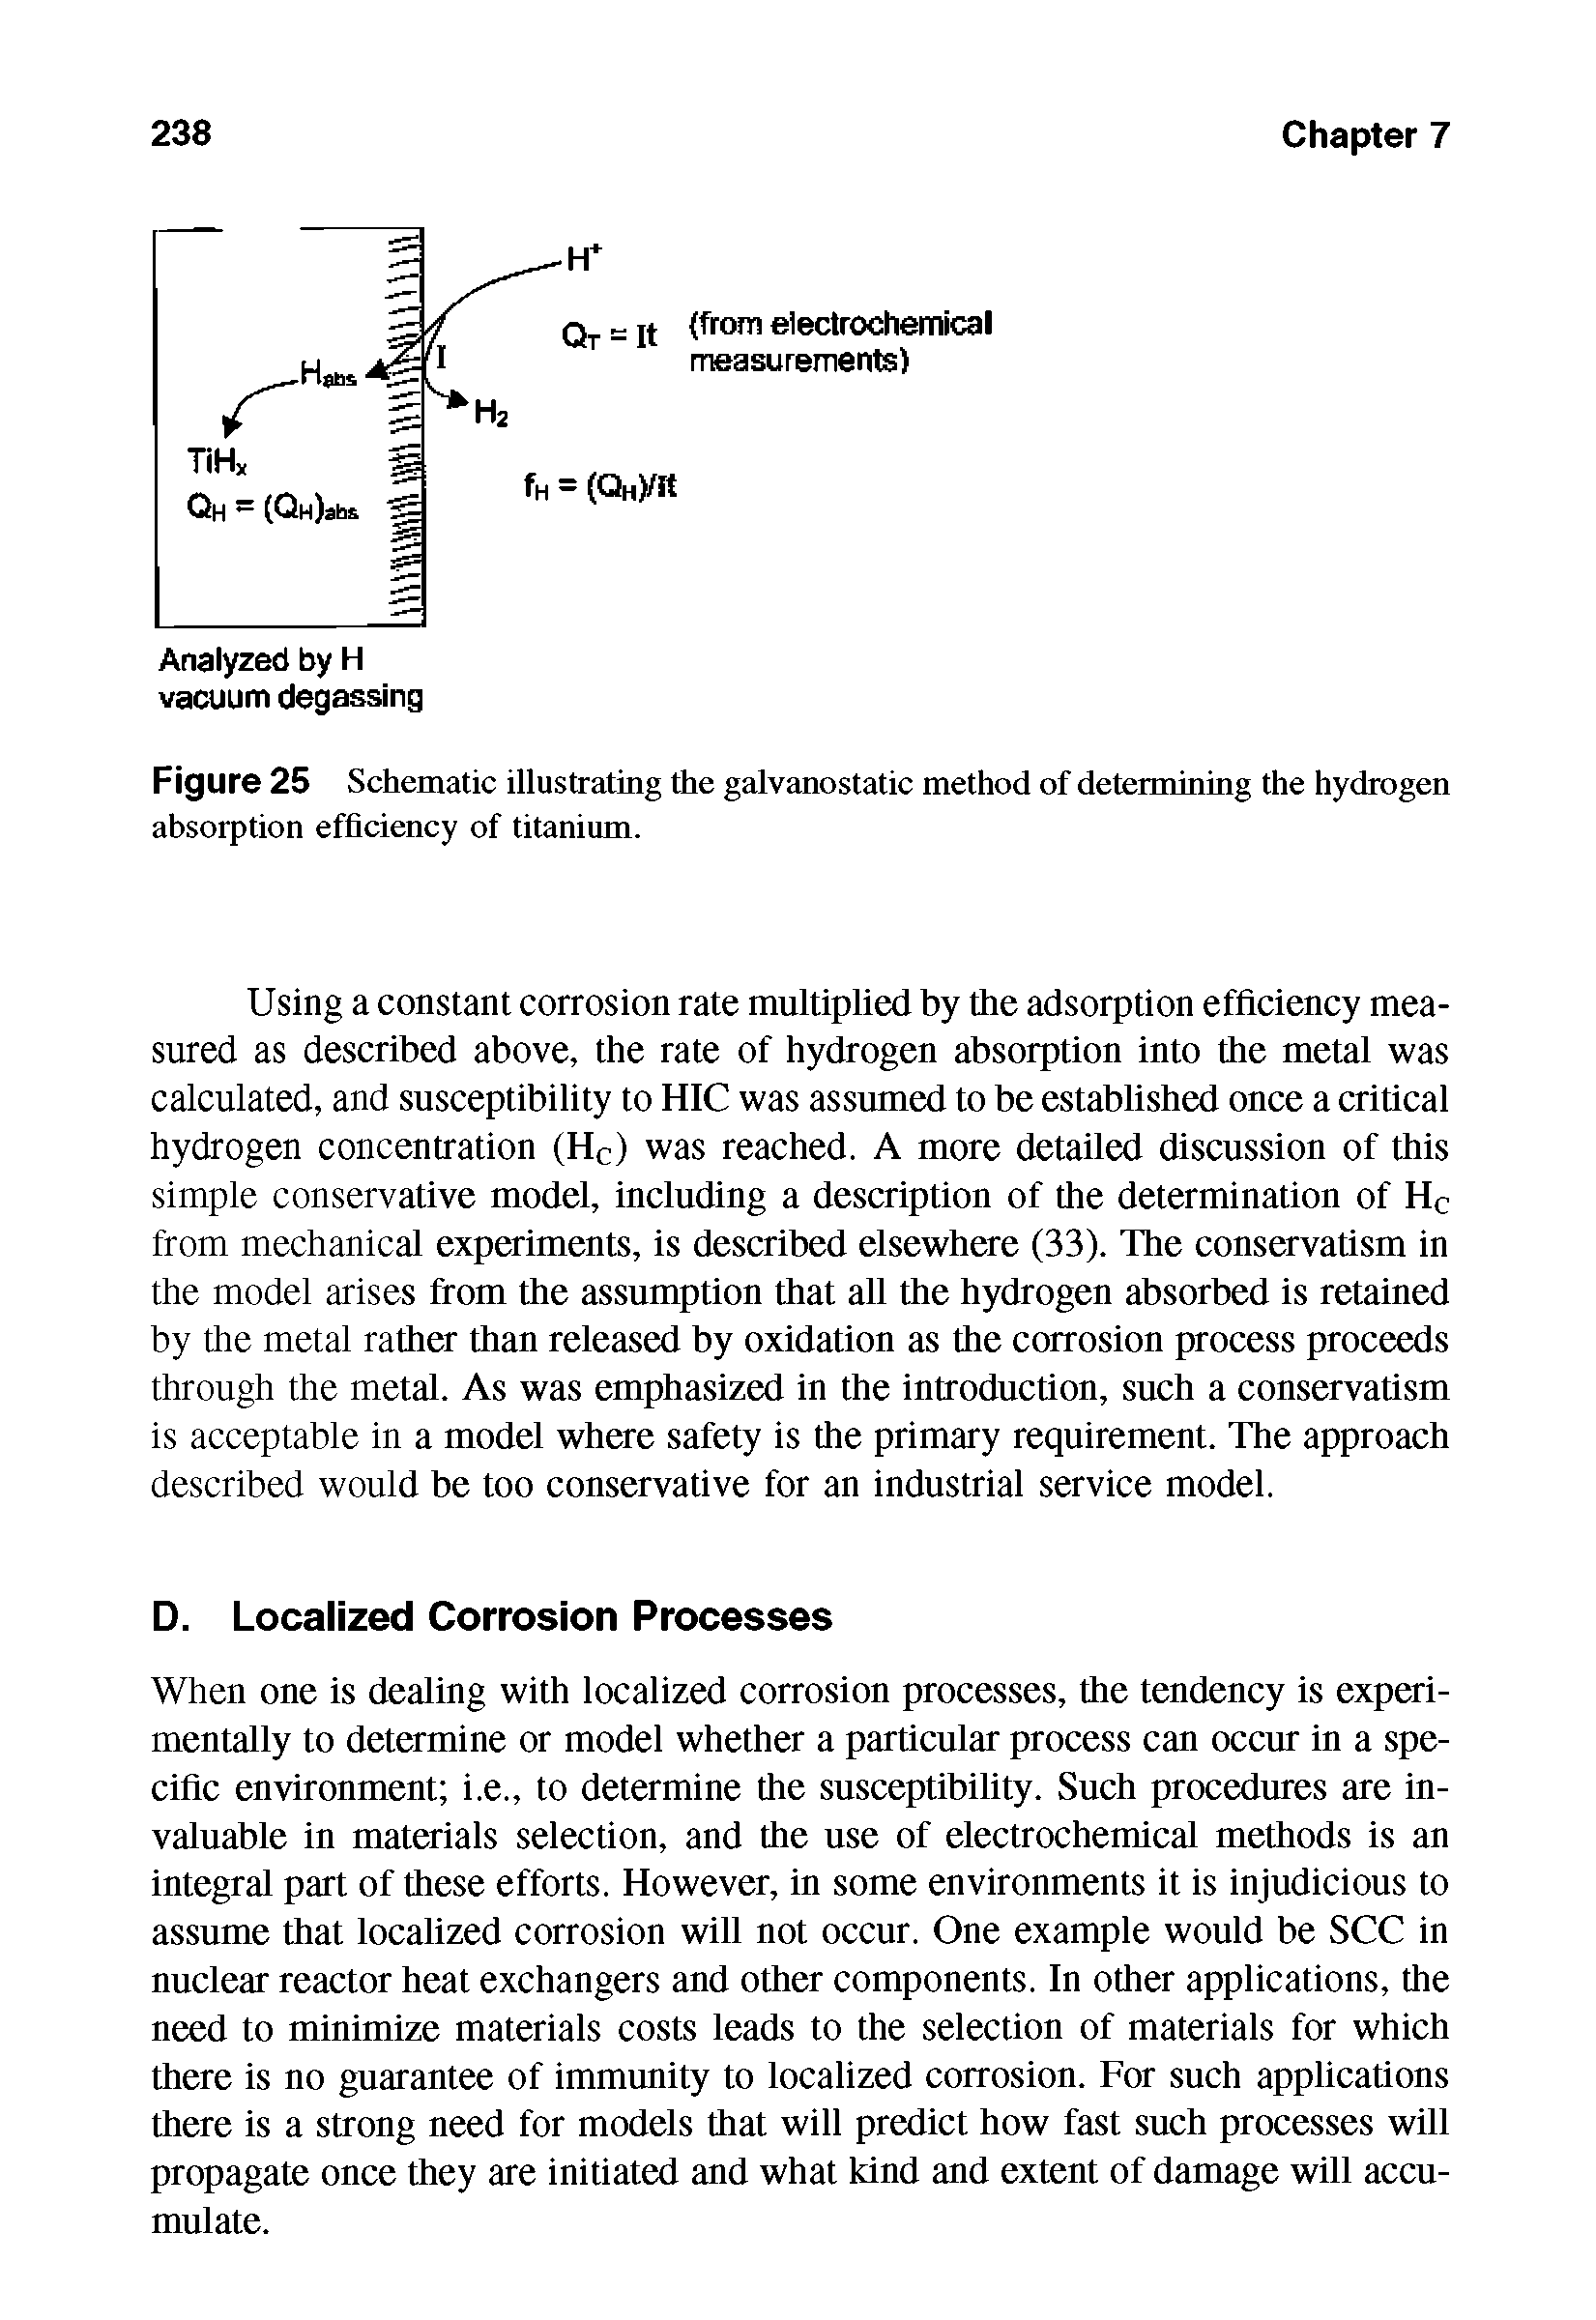 Figure 25 Schematic illustrating the galvanostatic method of determining the hydrogen absorption efficiency of titanium.